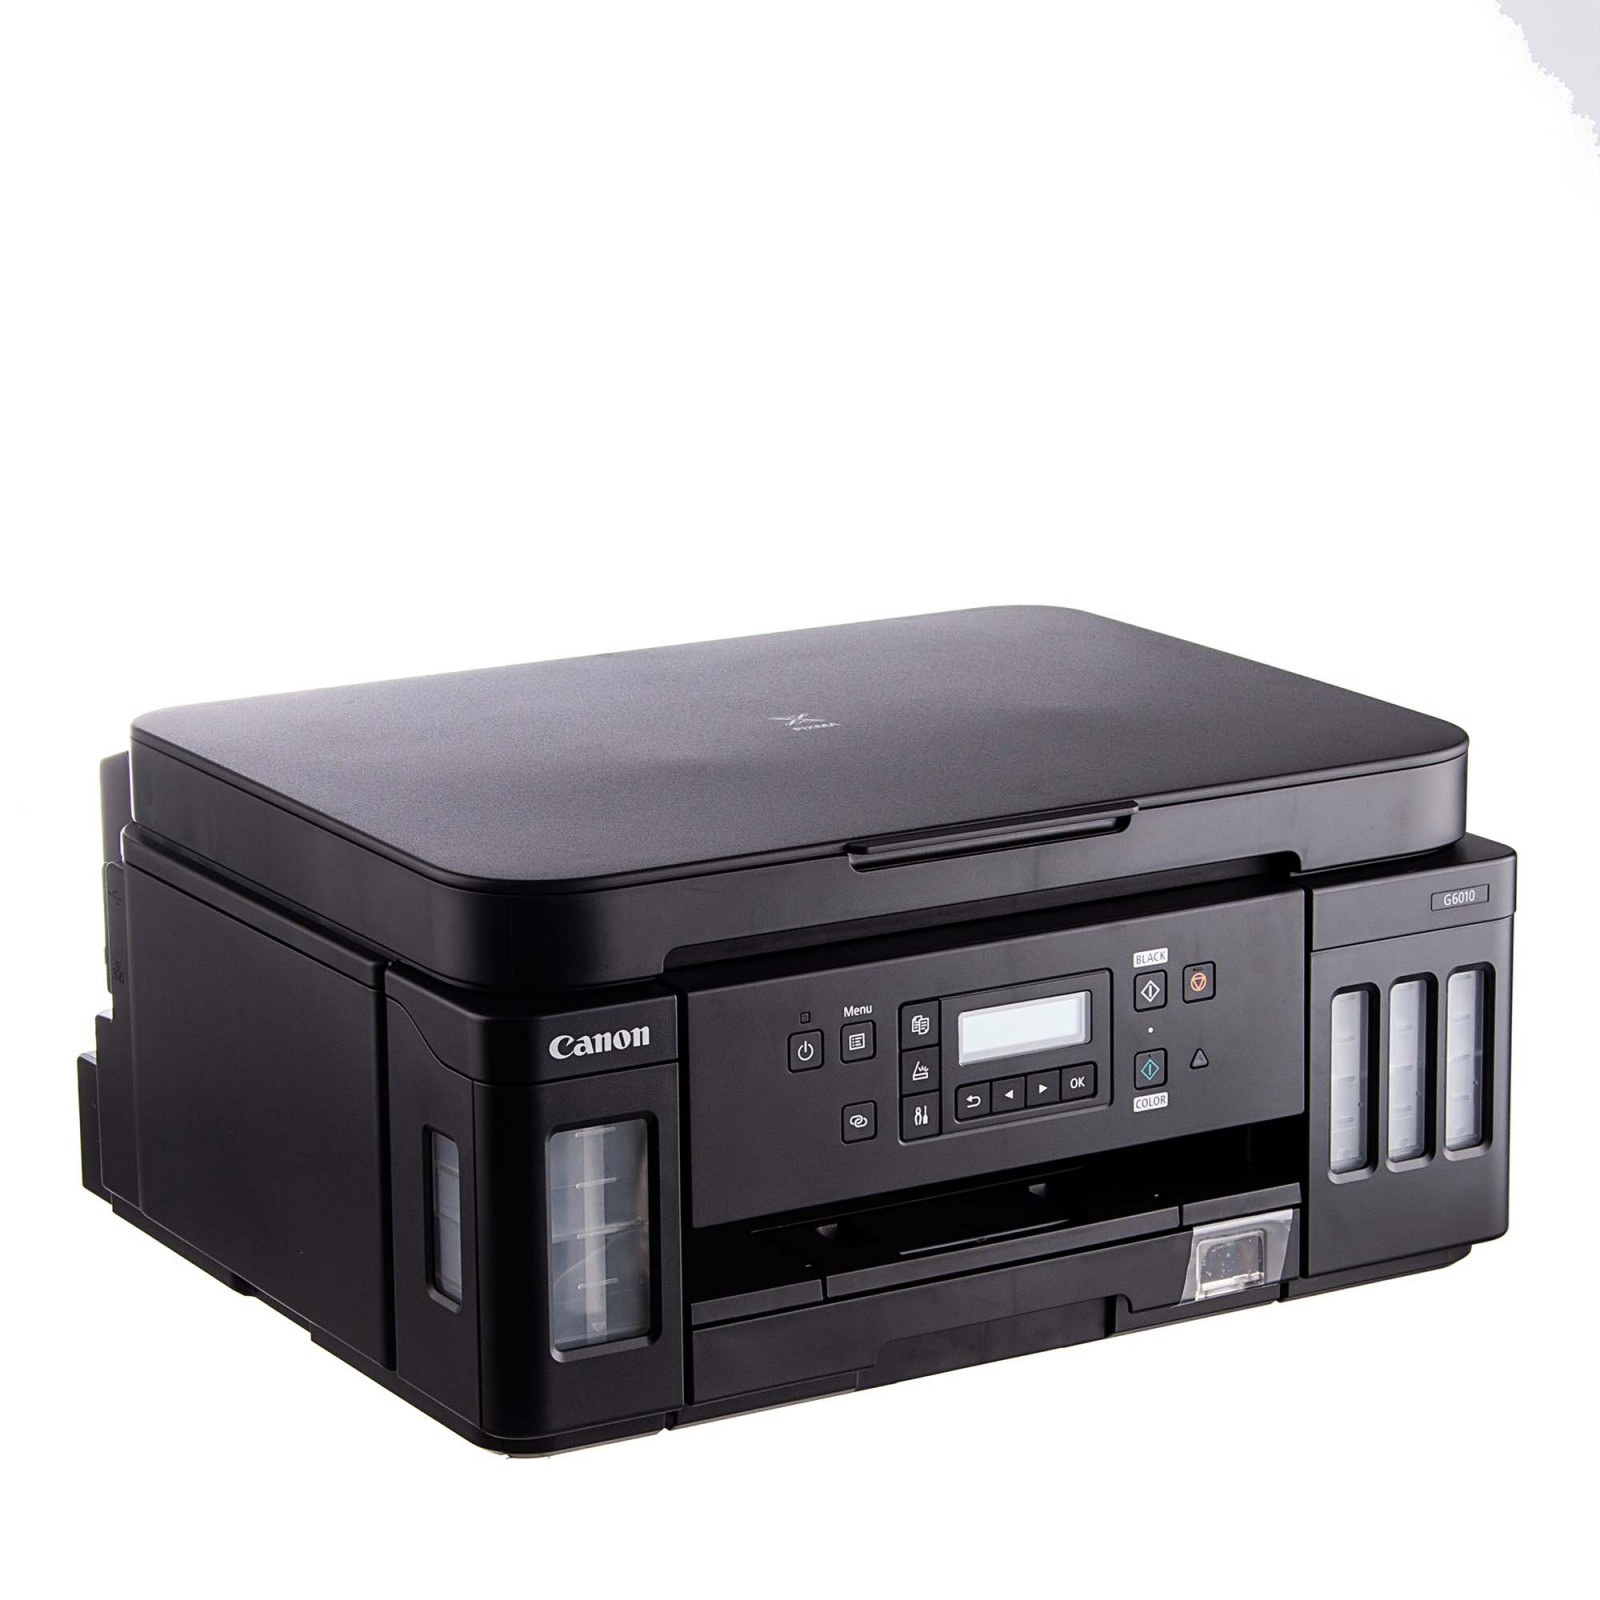 Impresora Multifuncional Canon G6010 - Visual Copy Unilago